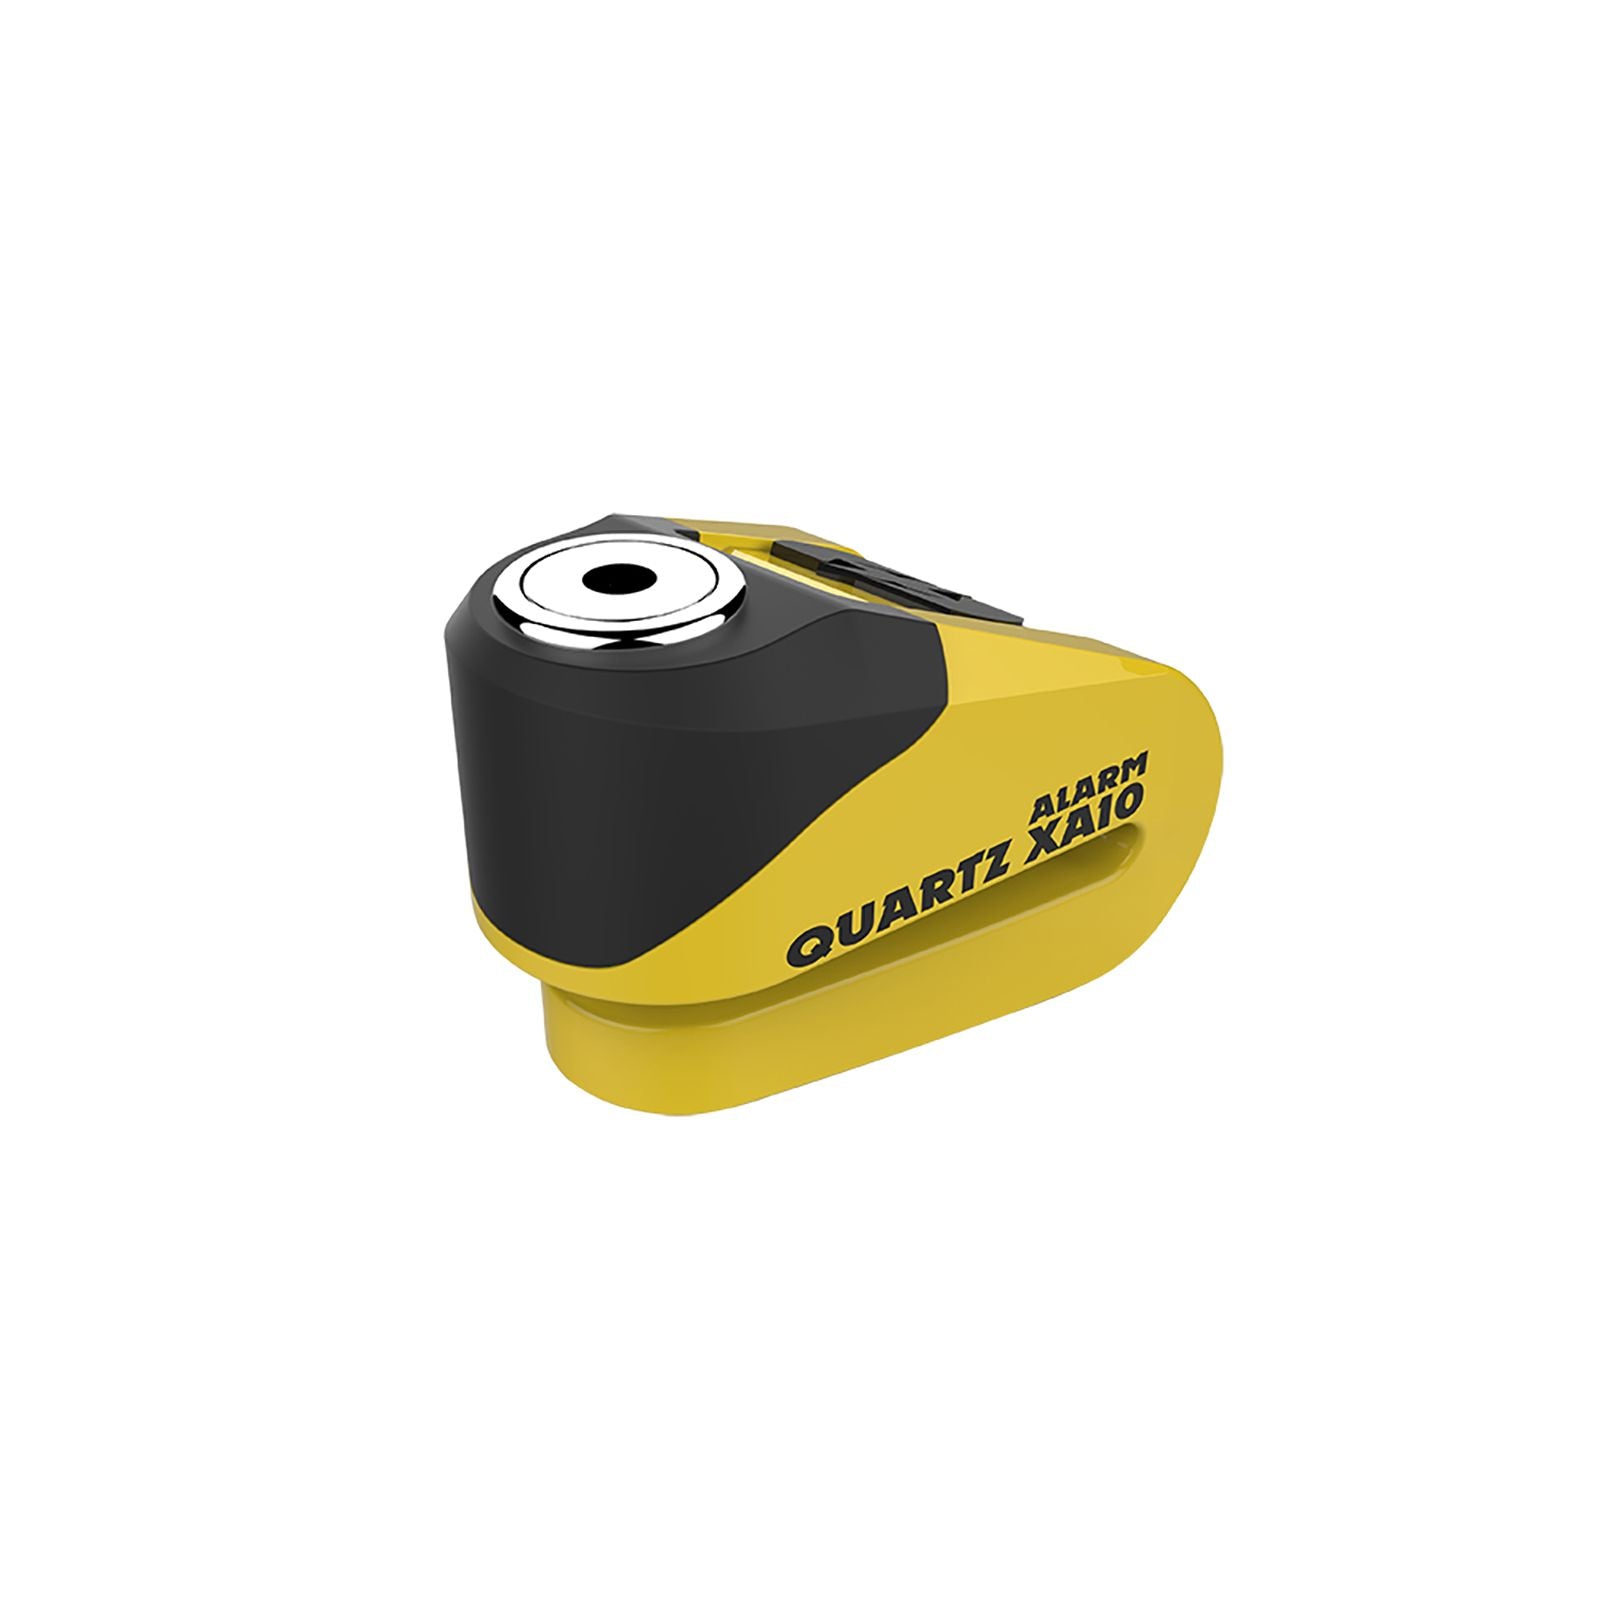 New OXFORD Disc Lock Alarm Quartz XA10 - Yellow #OXLK216